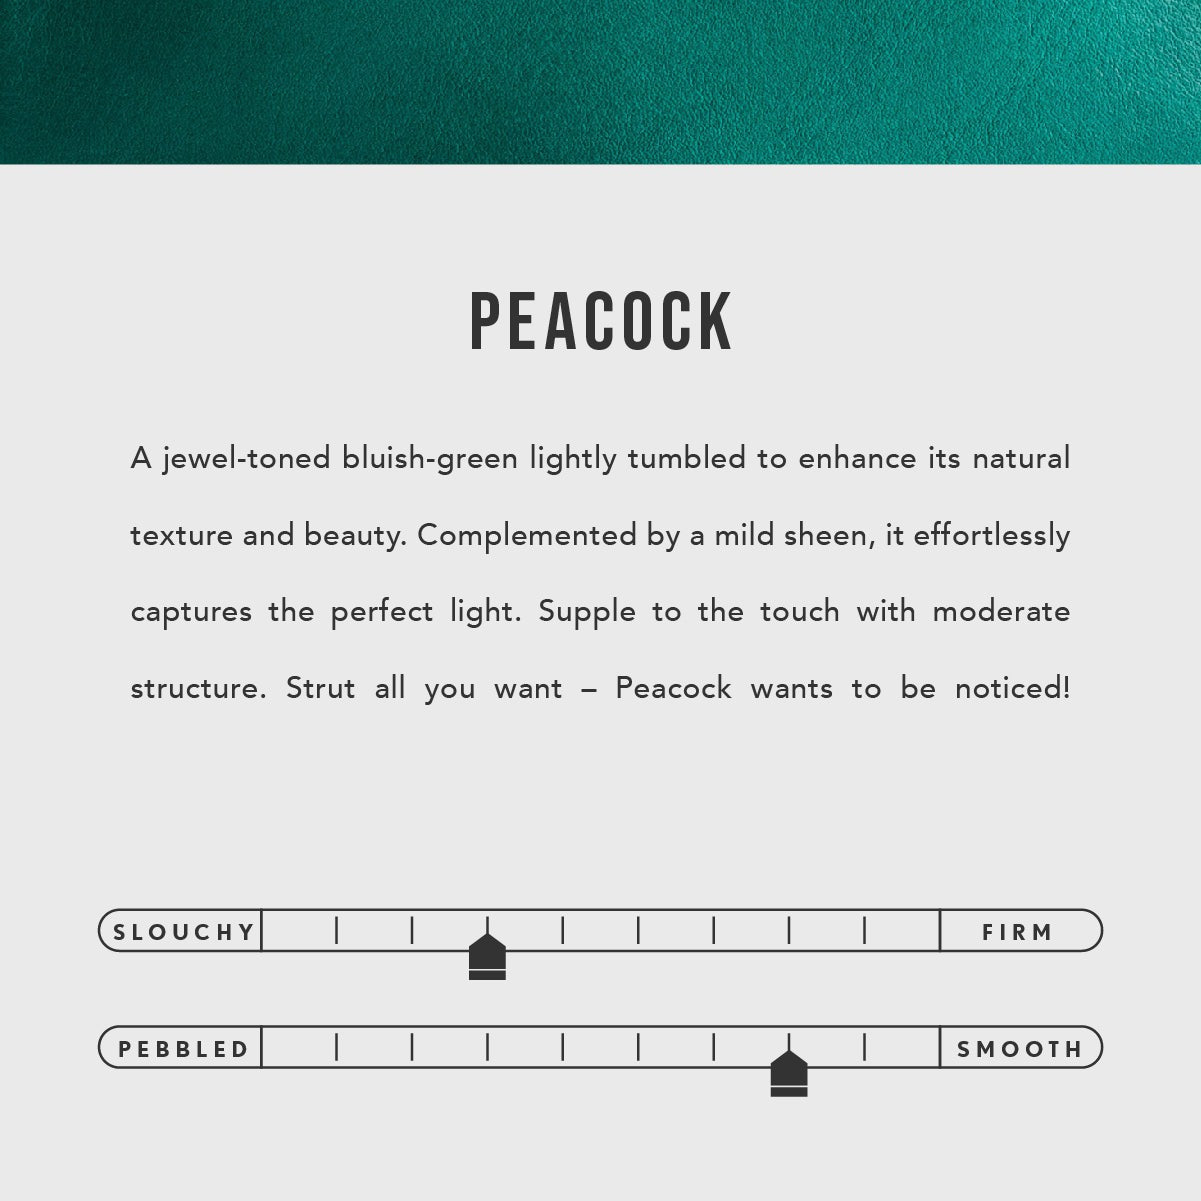 Peacock | infographic